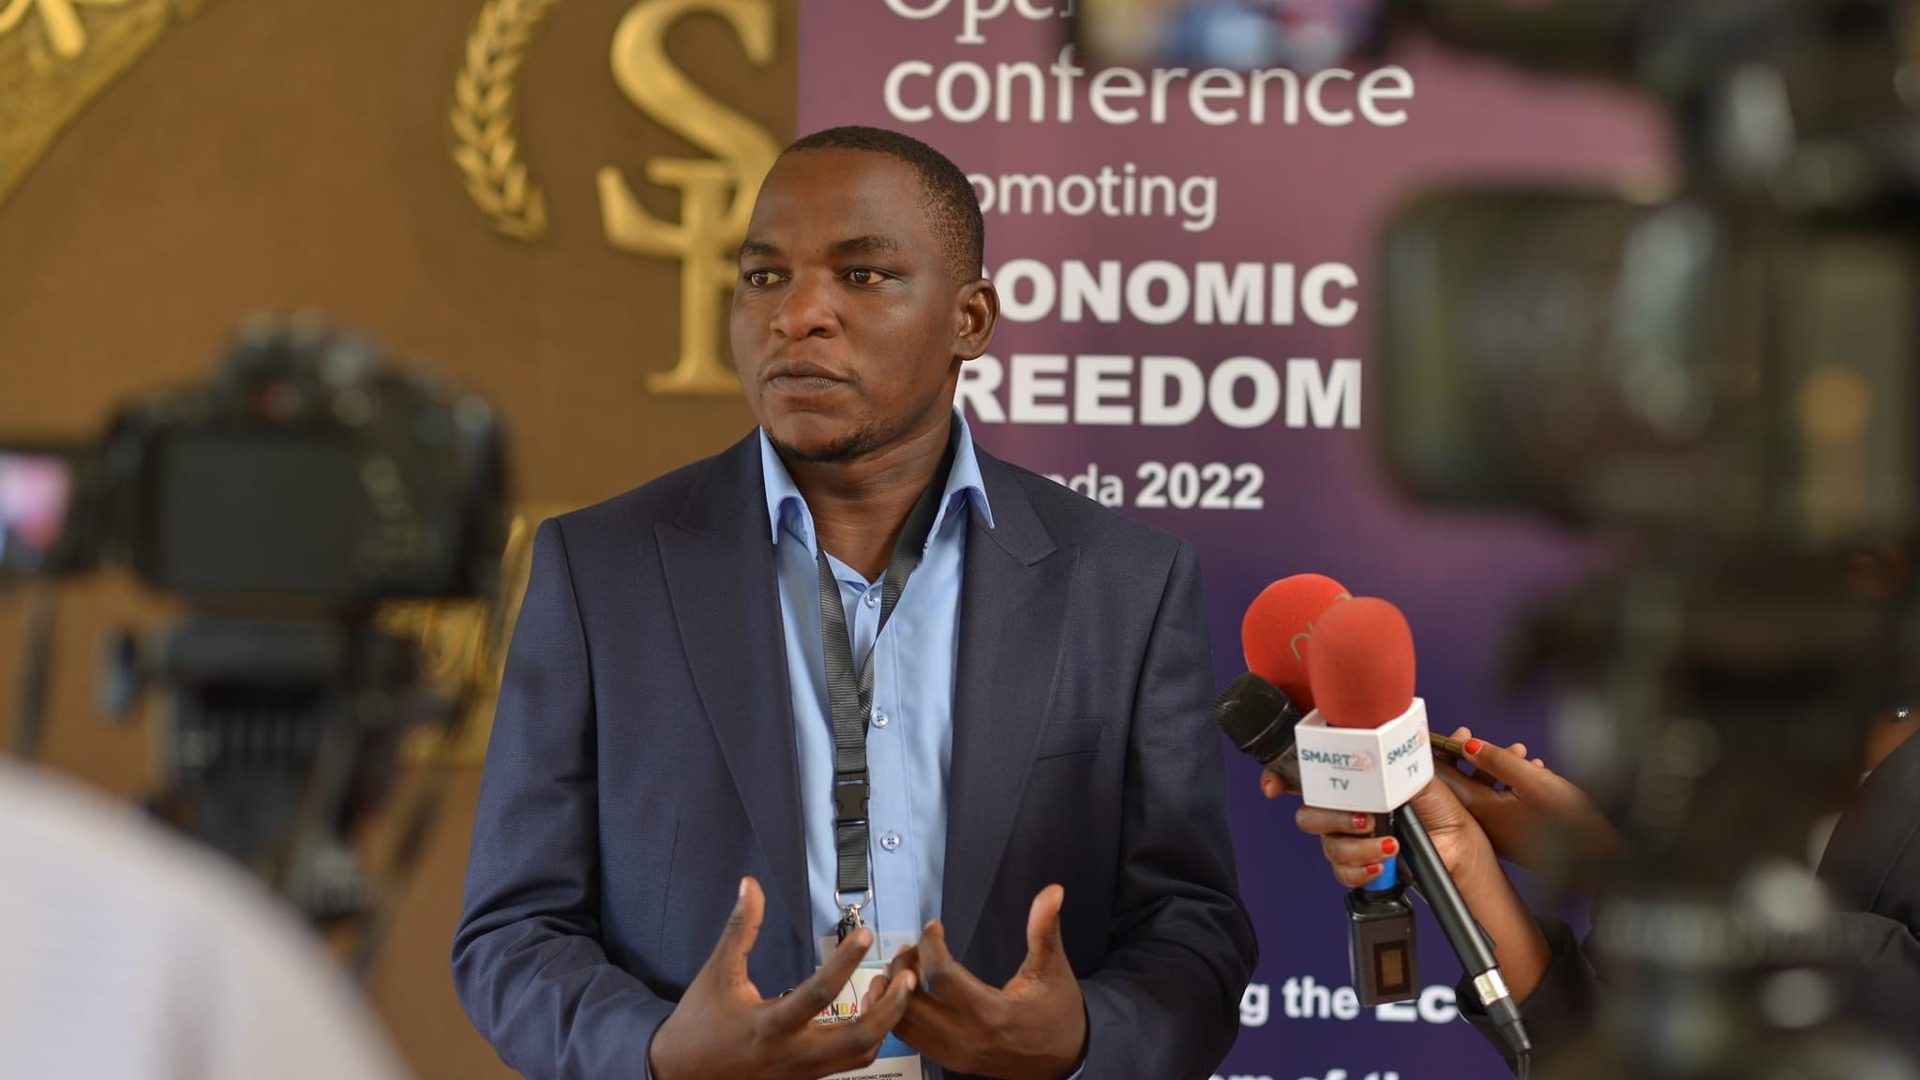 SFL alumnus from Uganda, Mugabi John, founder of Action for Liberty and Economic Development, organized the first Uganda Economic Freedom Audit